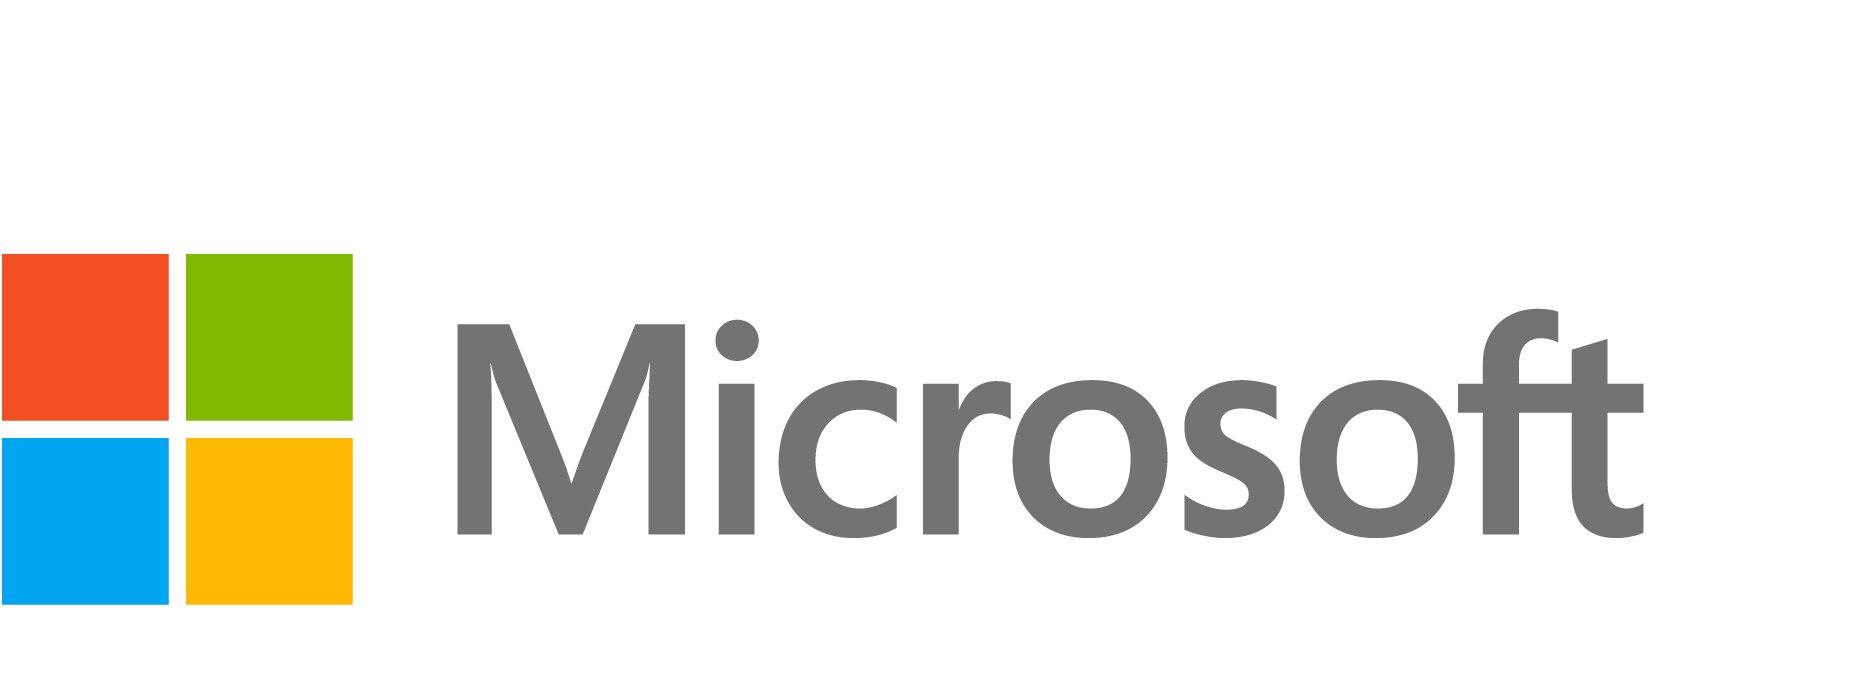 Microsoft Dynamics 365 for Sales Premium - subscription license (1 month) - 1 license